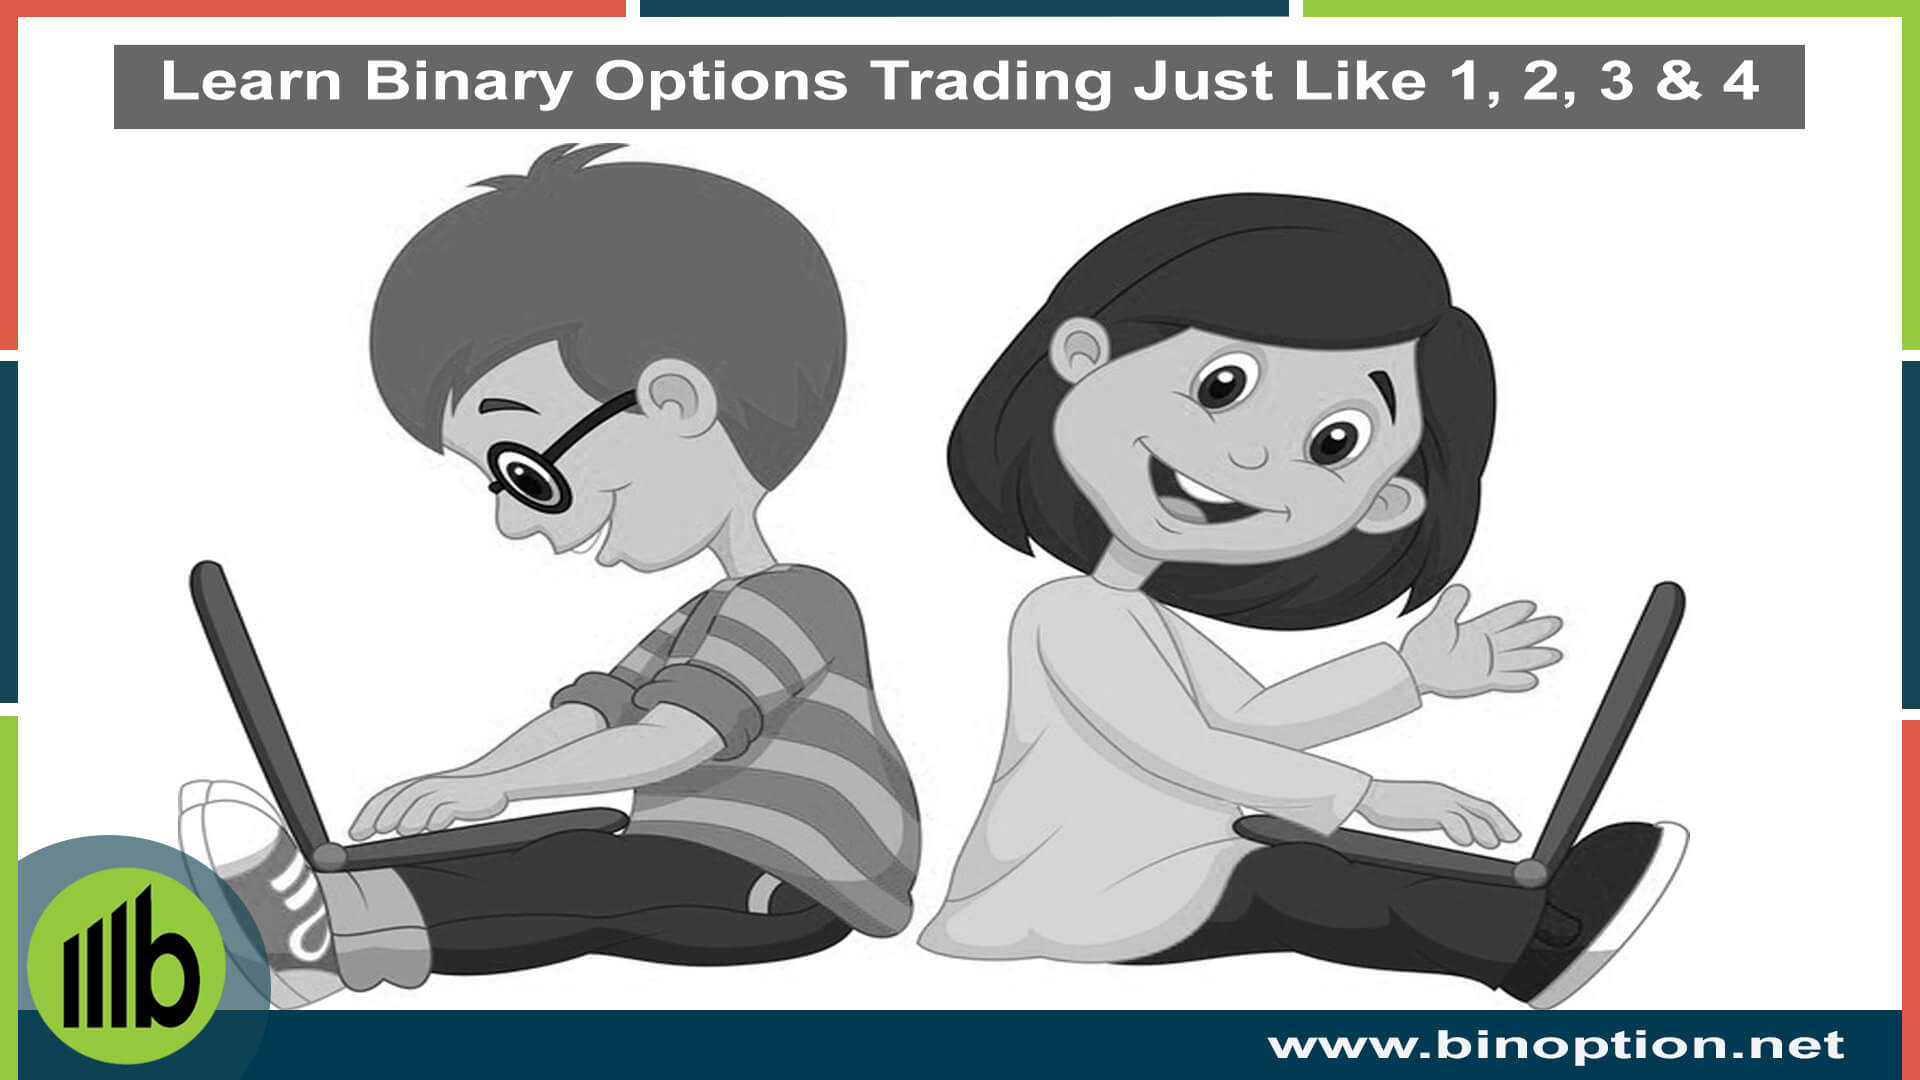 Learn binary options trading